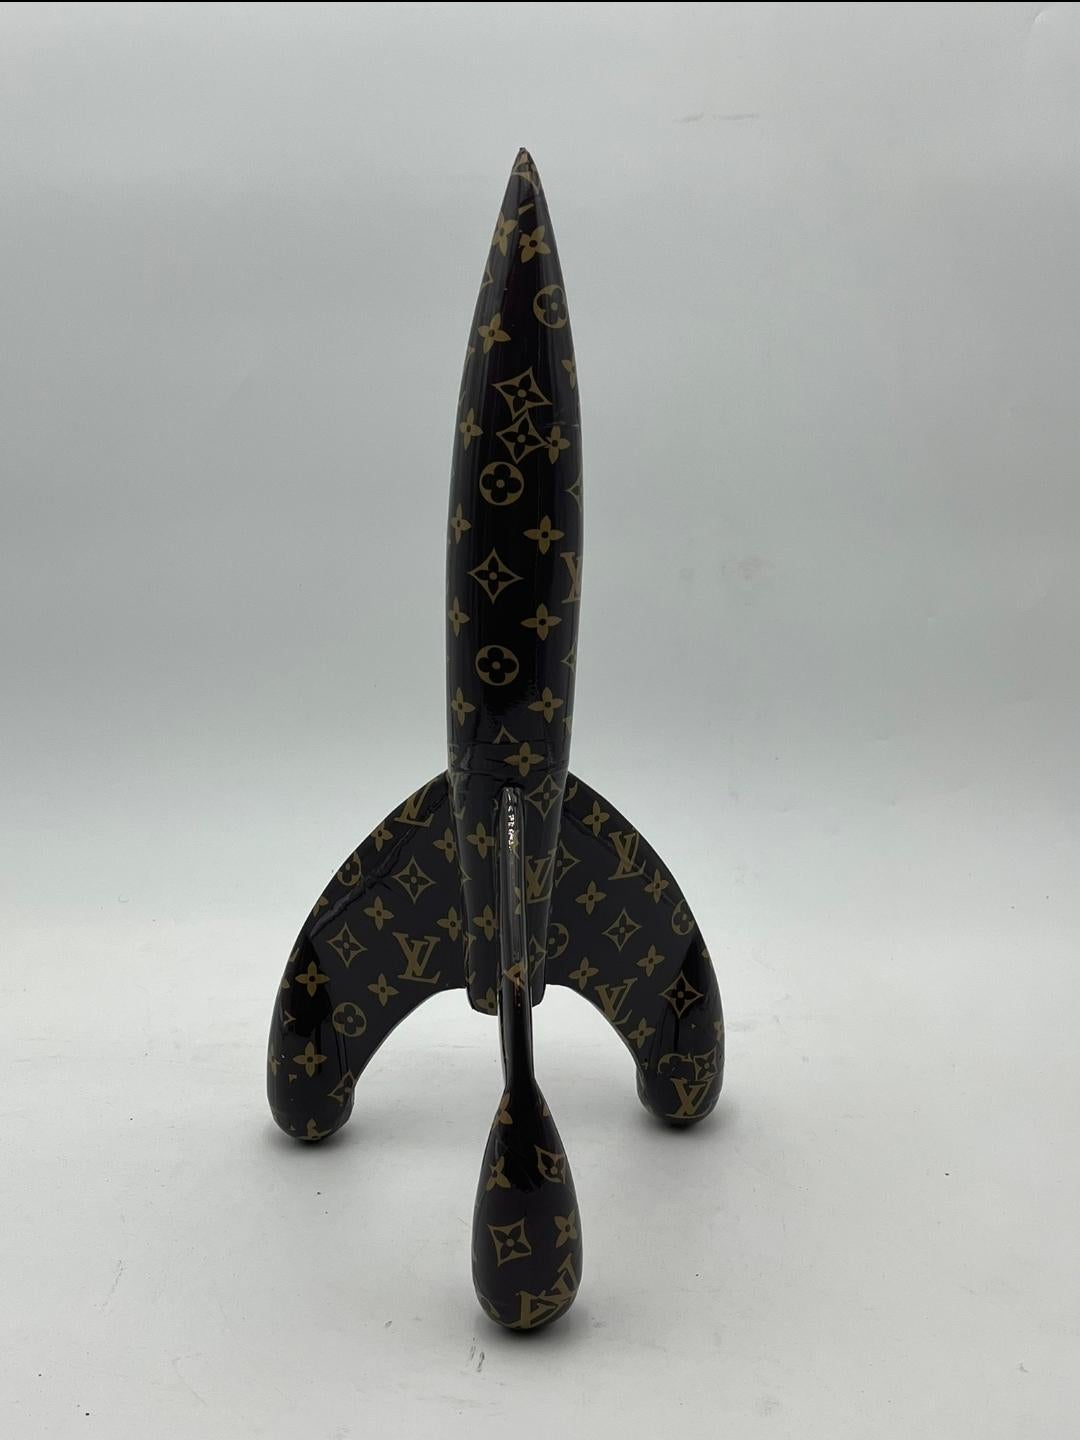 Naor Figurative Sculpture - 35cm Rocket LV Tribute